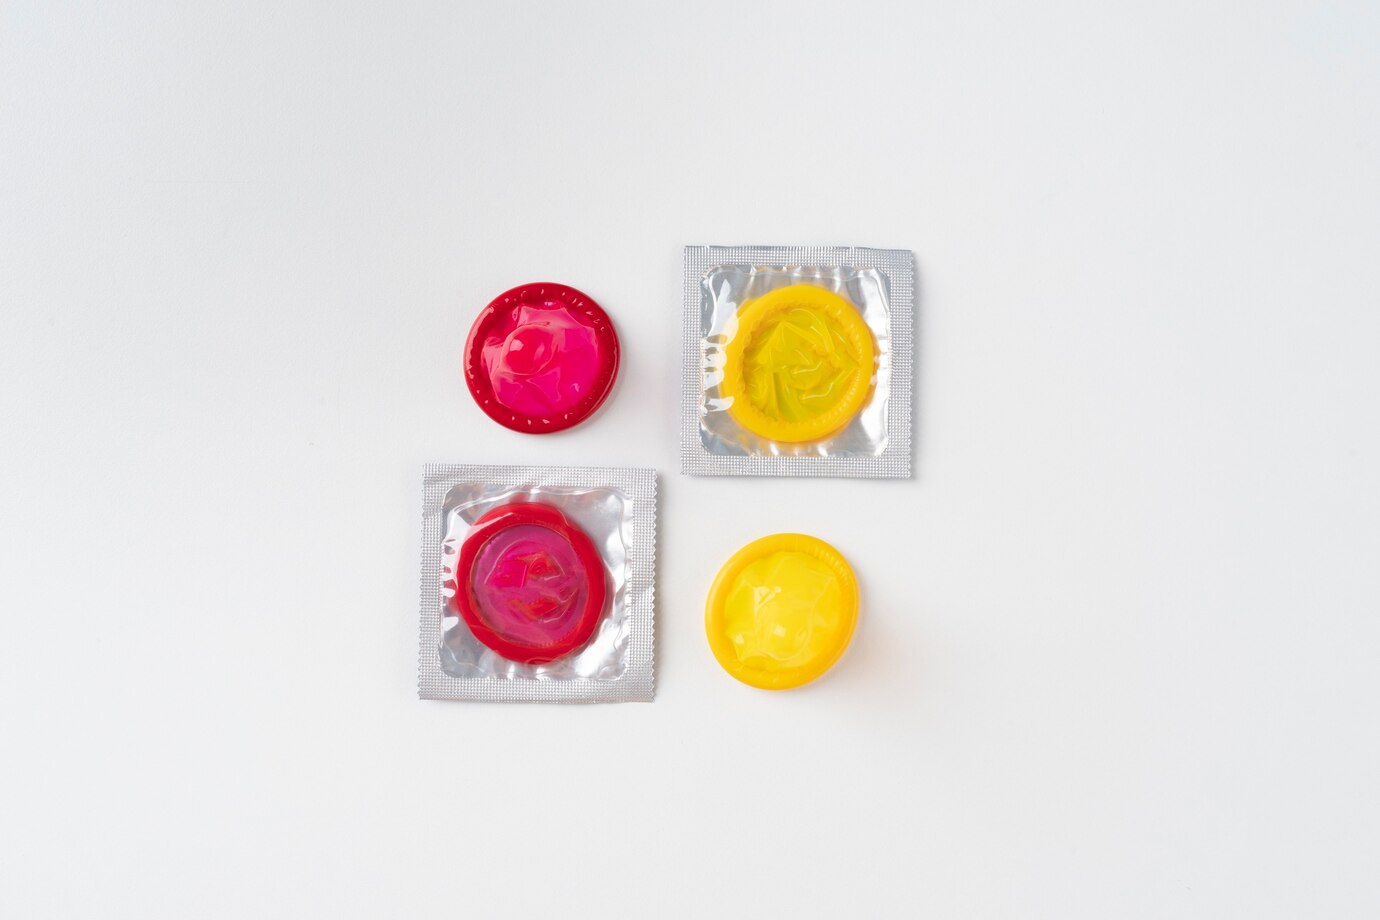 čtyři kondomy